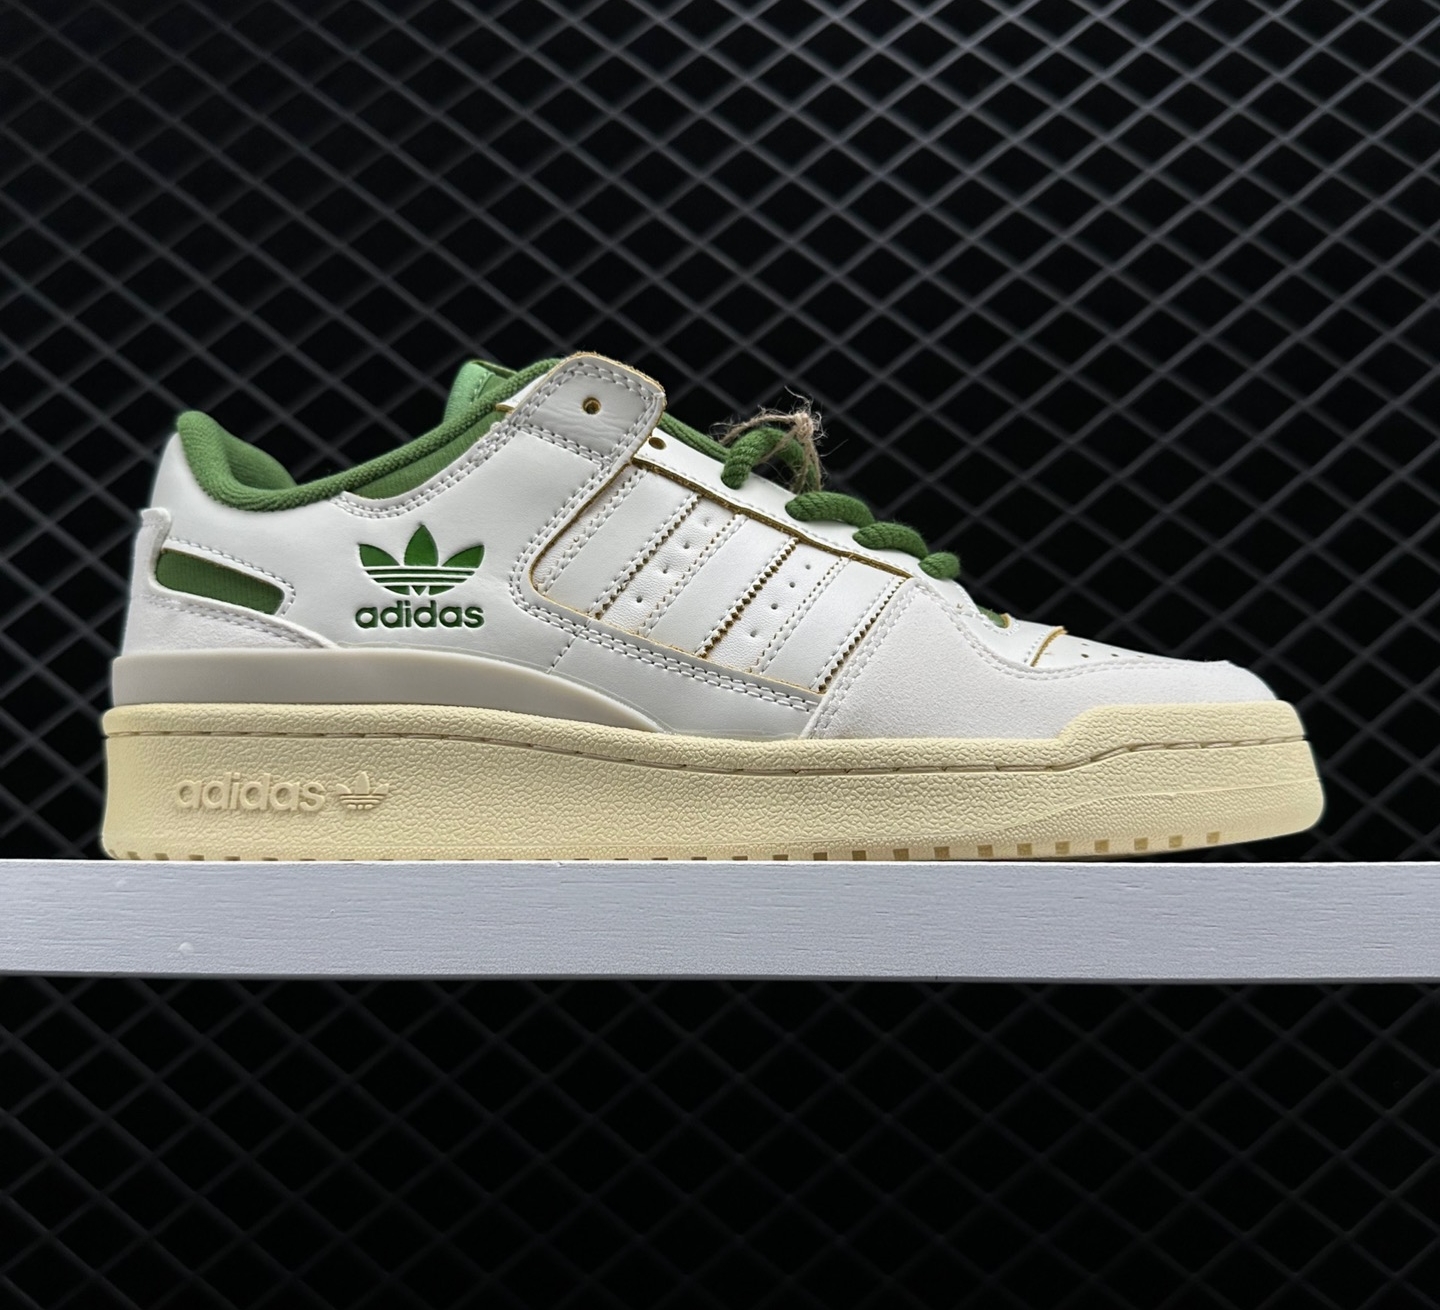 Adidas Forum 84 Low Classic 'Vintage Green' FZ6296 - Stylish Retro Sneakers